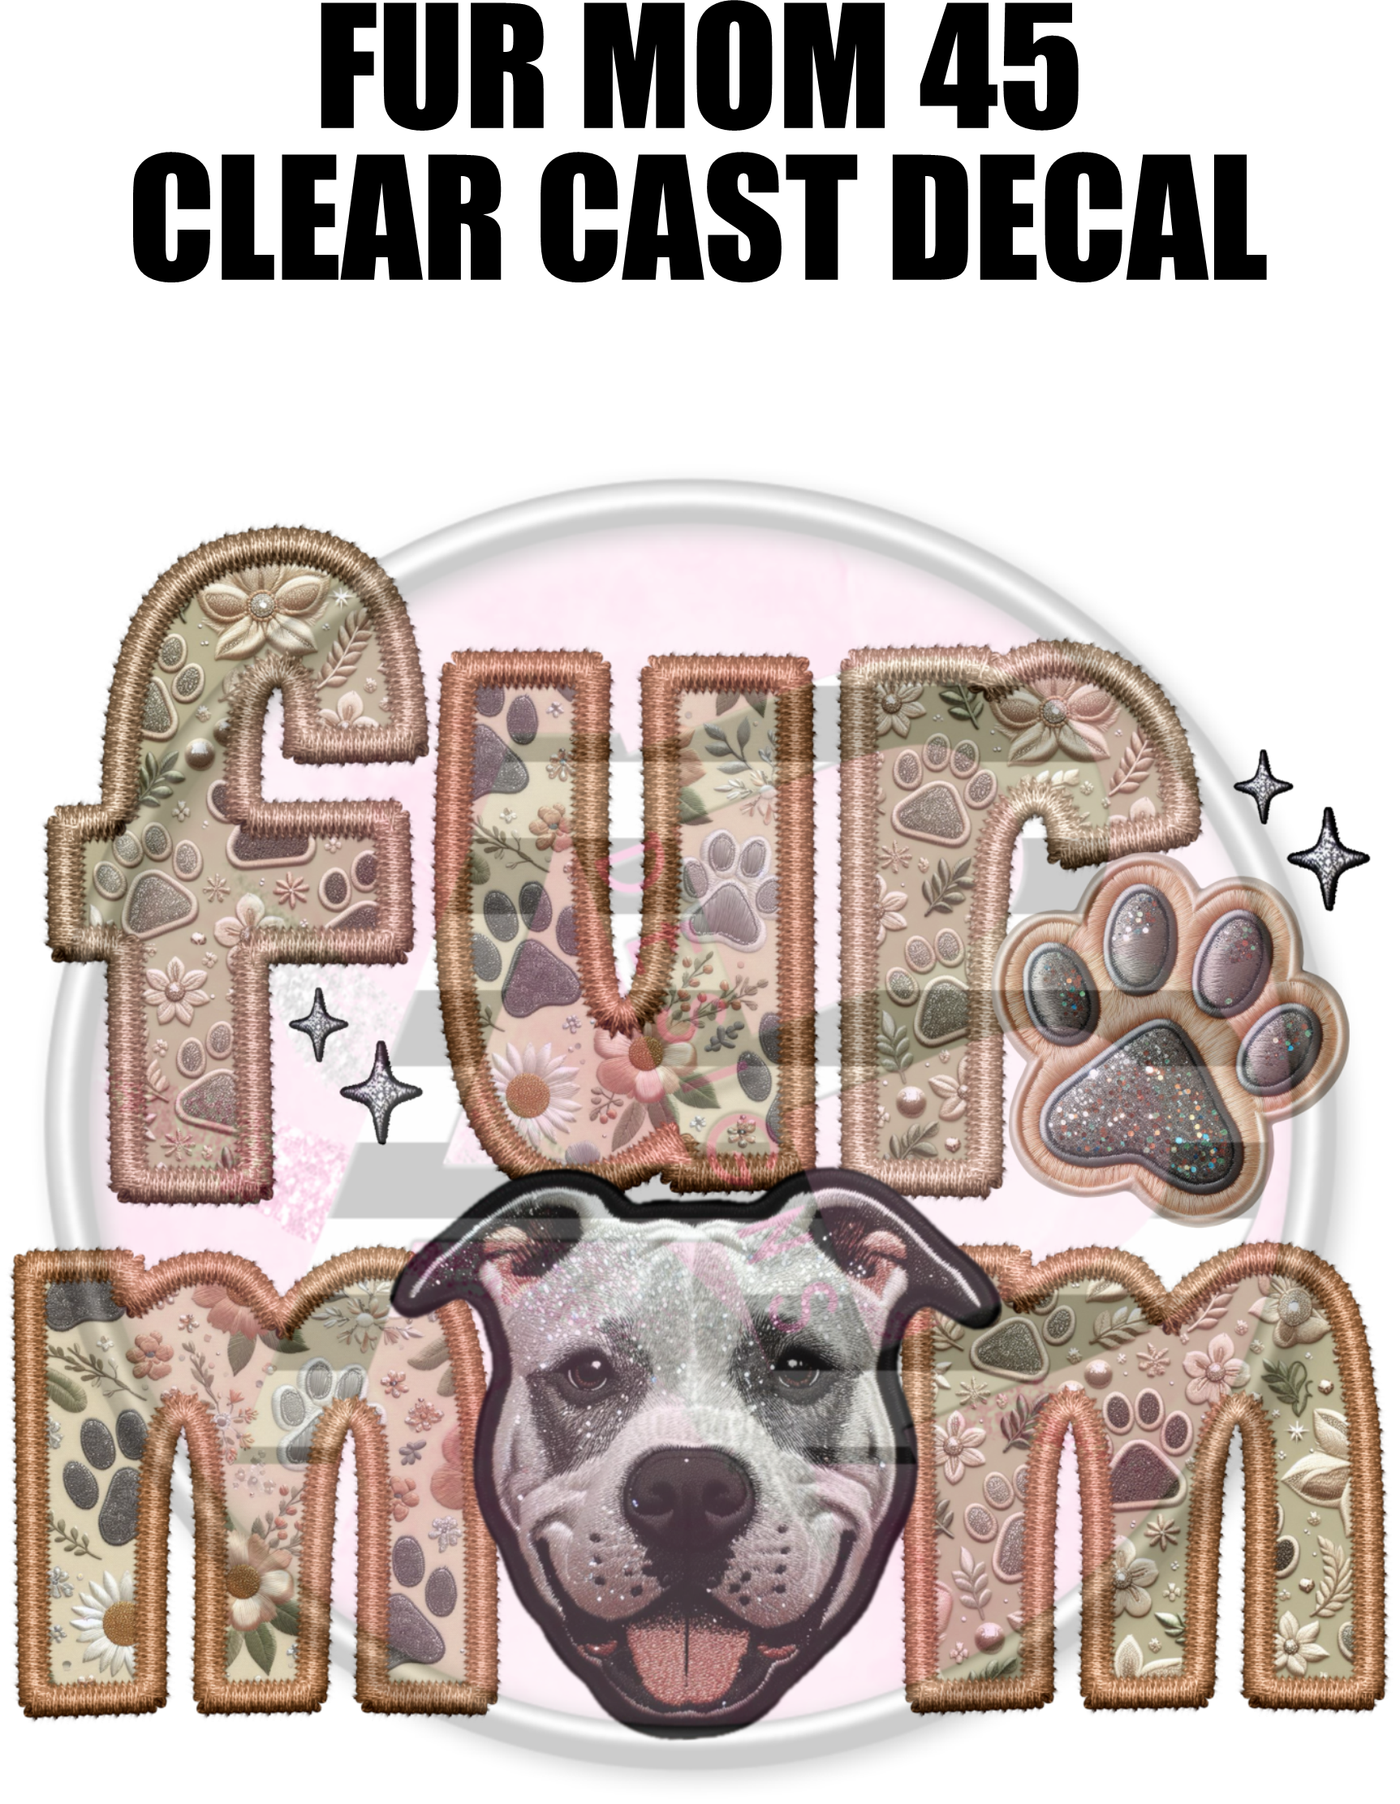 Fur Mom 45 - Clear Cast Decal